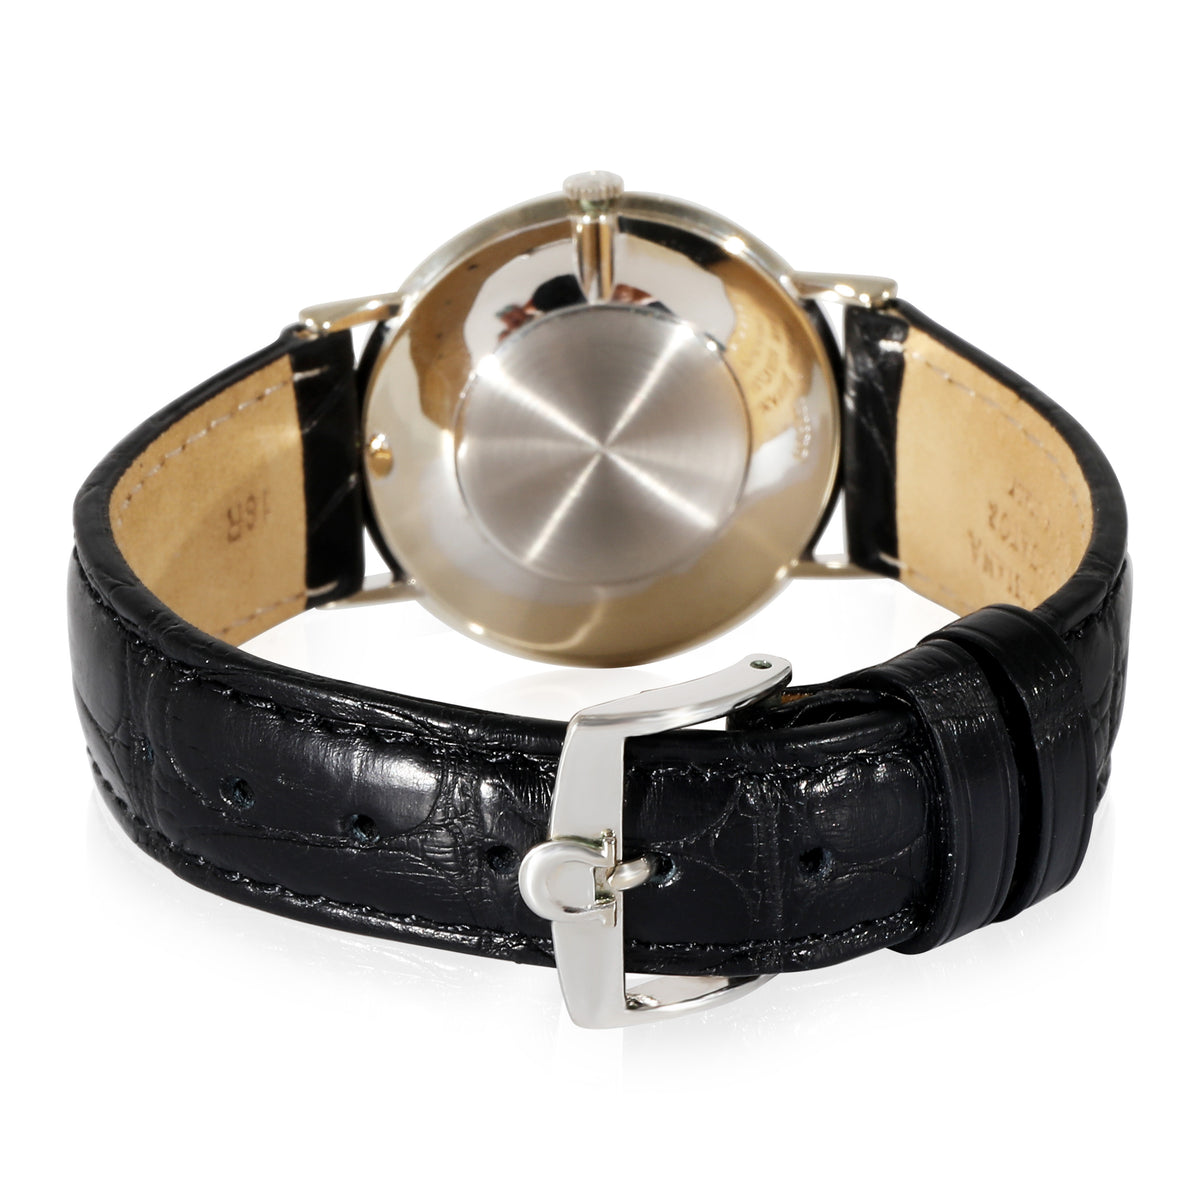 Omega DeVille D6672 Men's Watch in 14kt White Gold